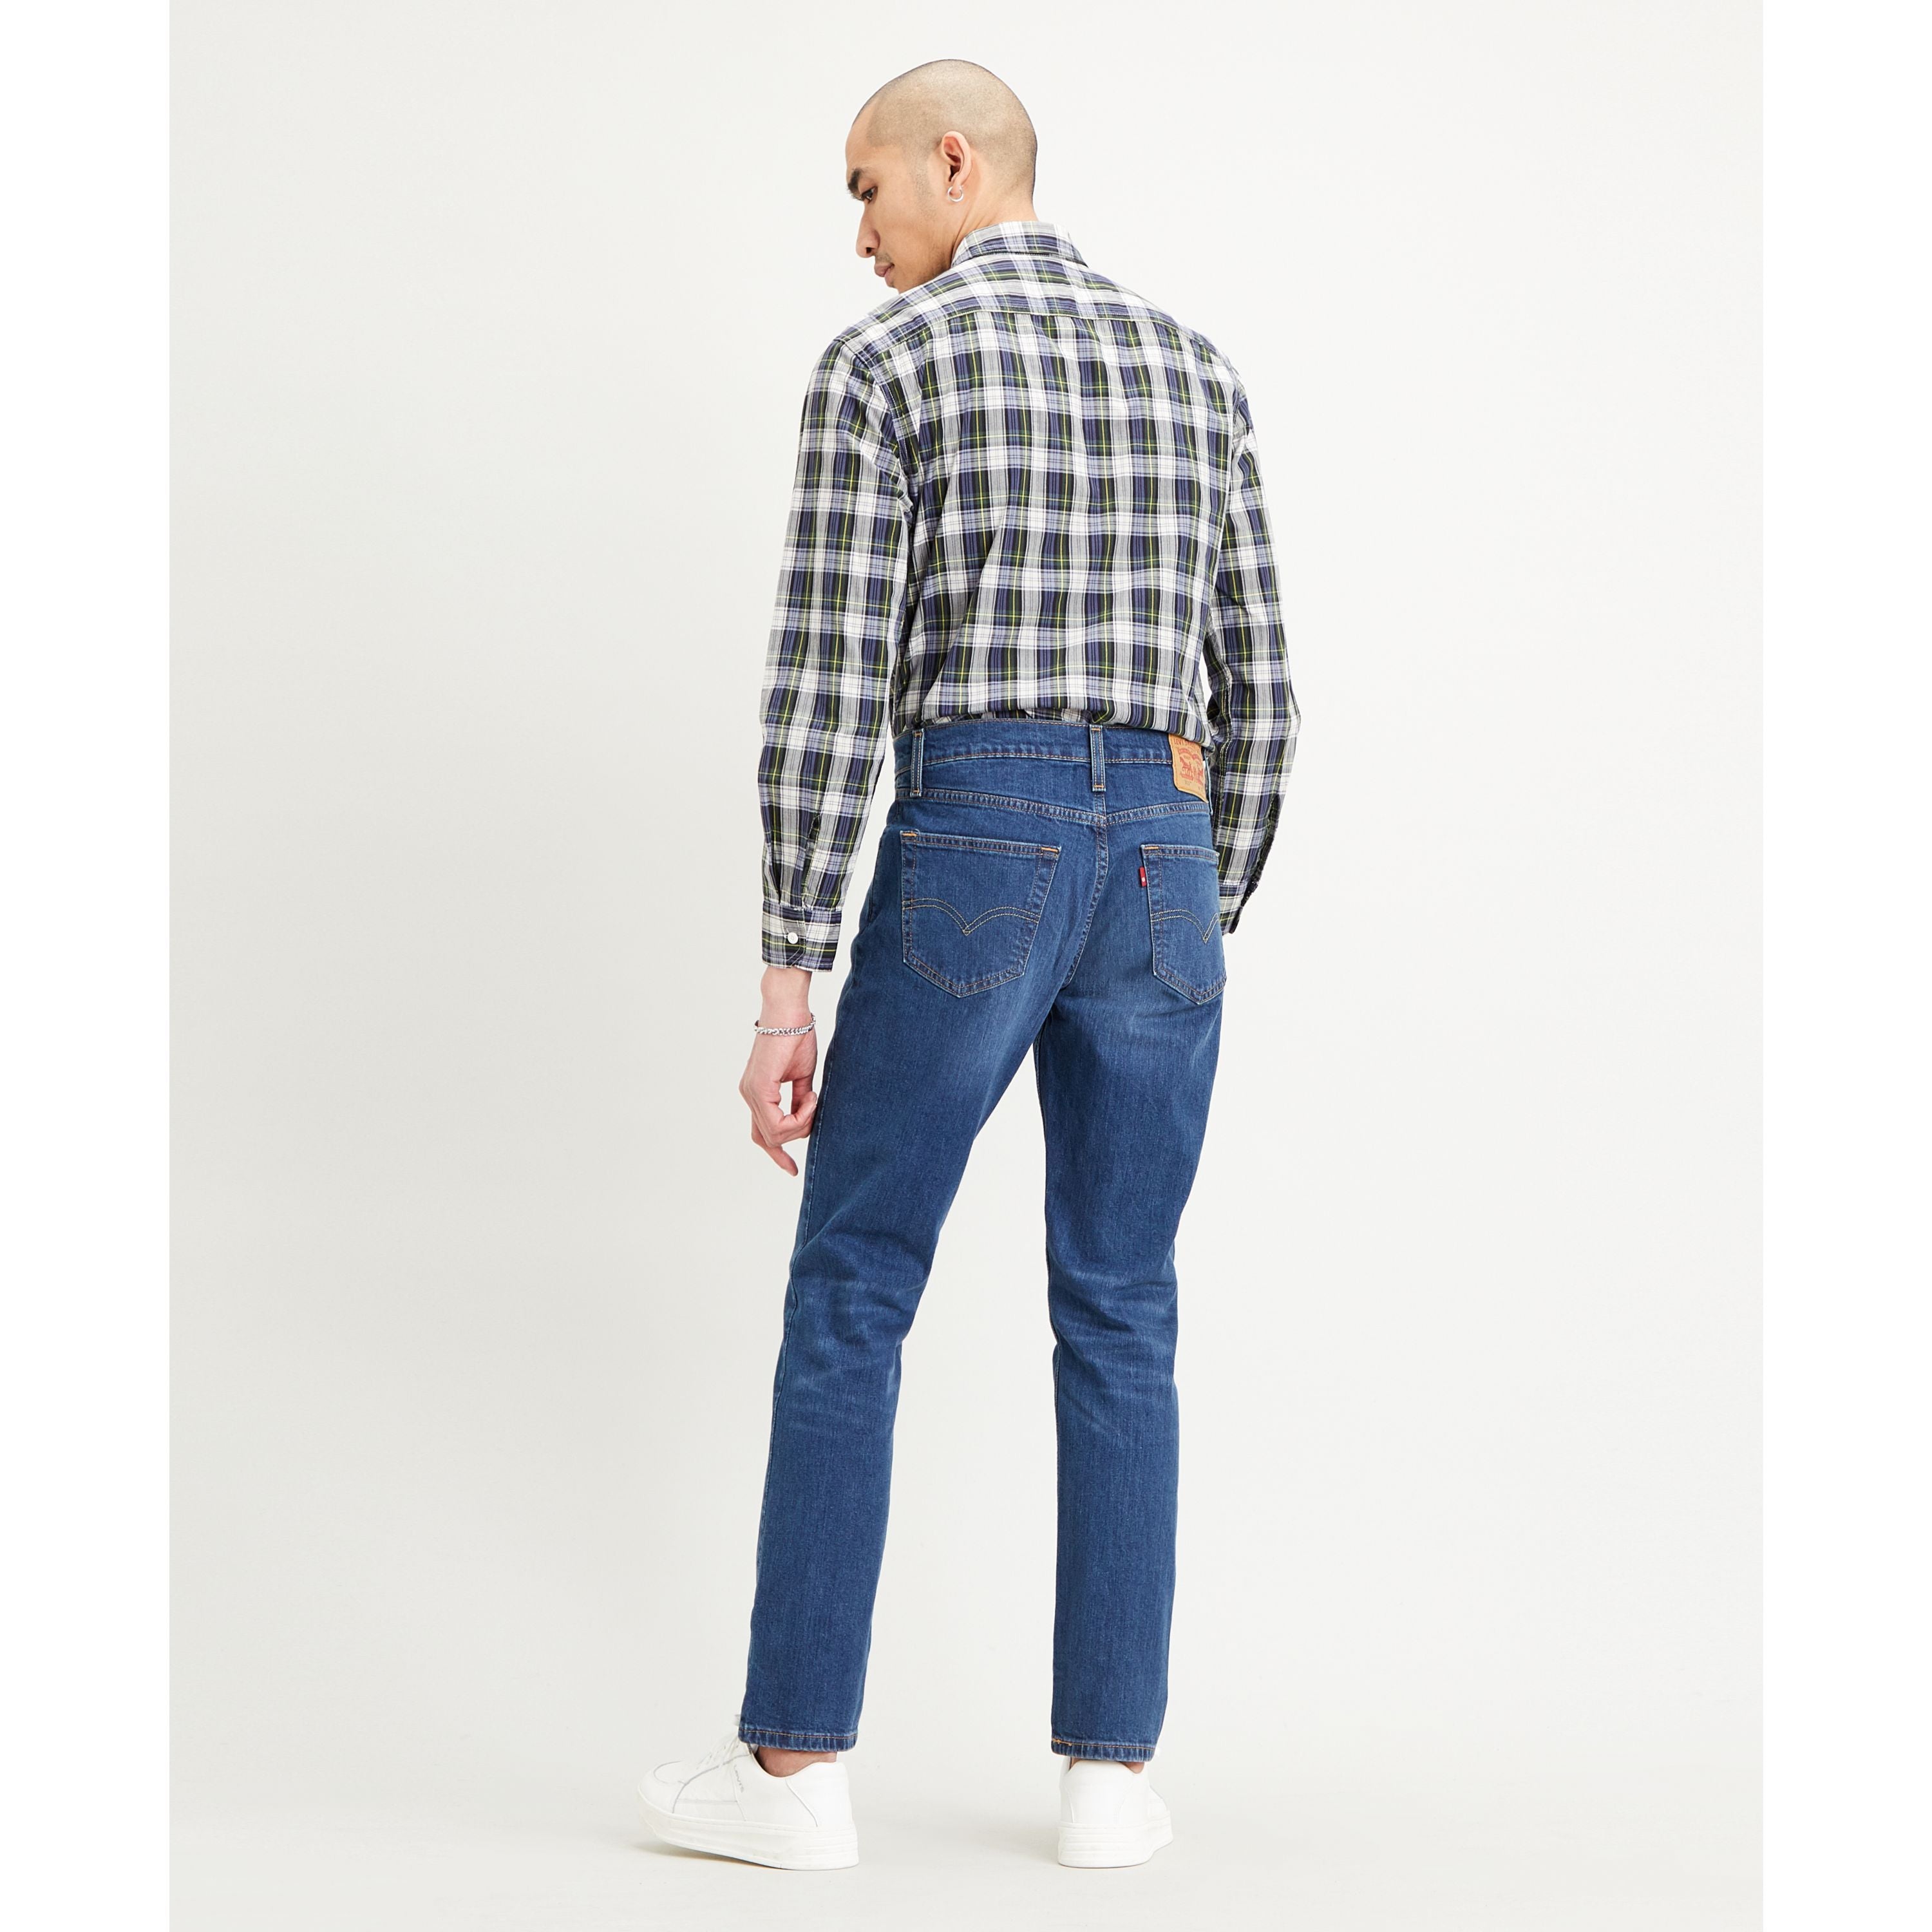 pantalones-jeans-levis-511-stretch-p-caballeros